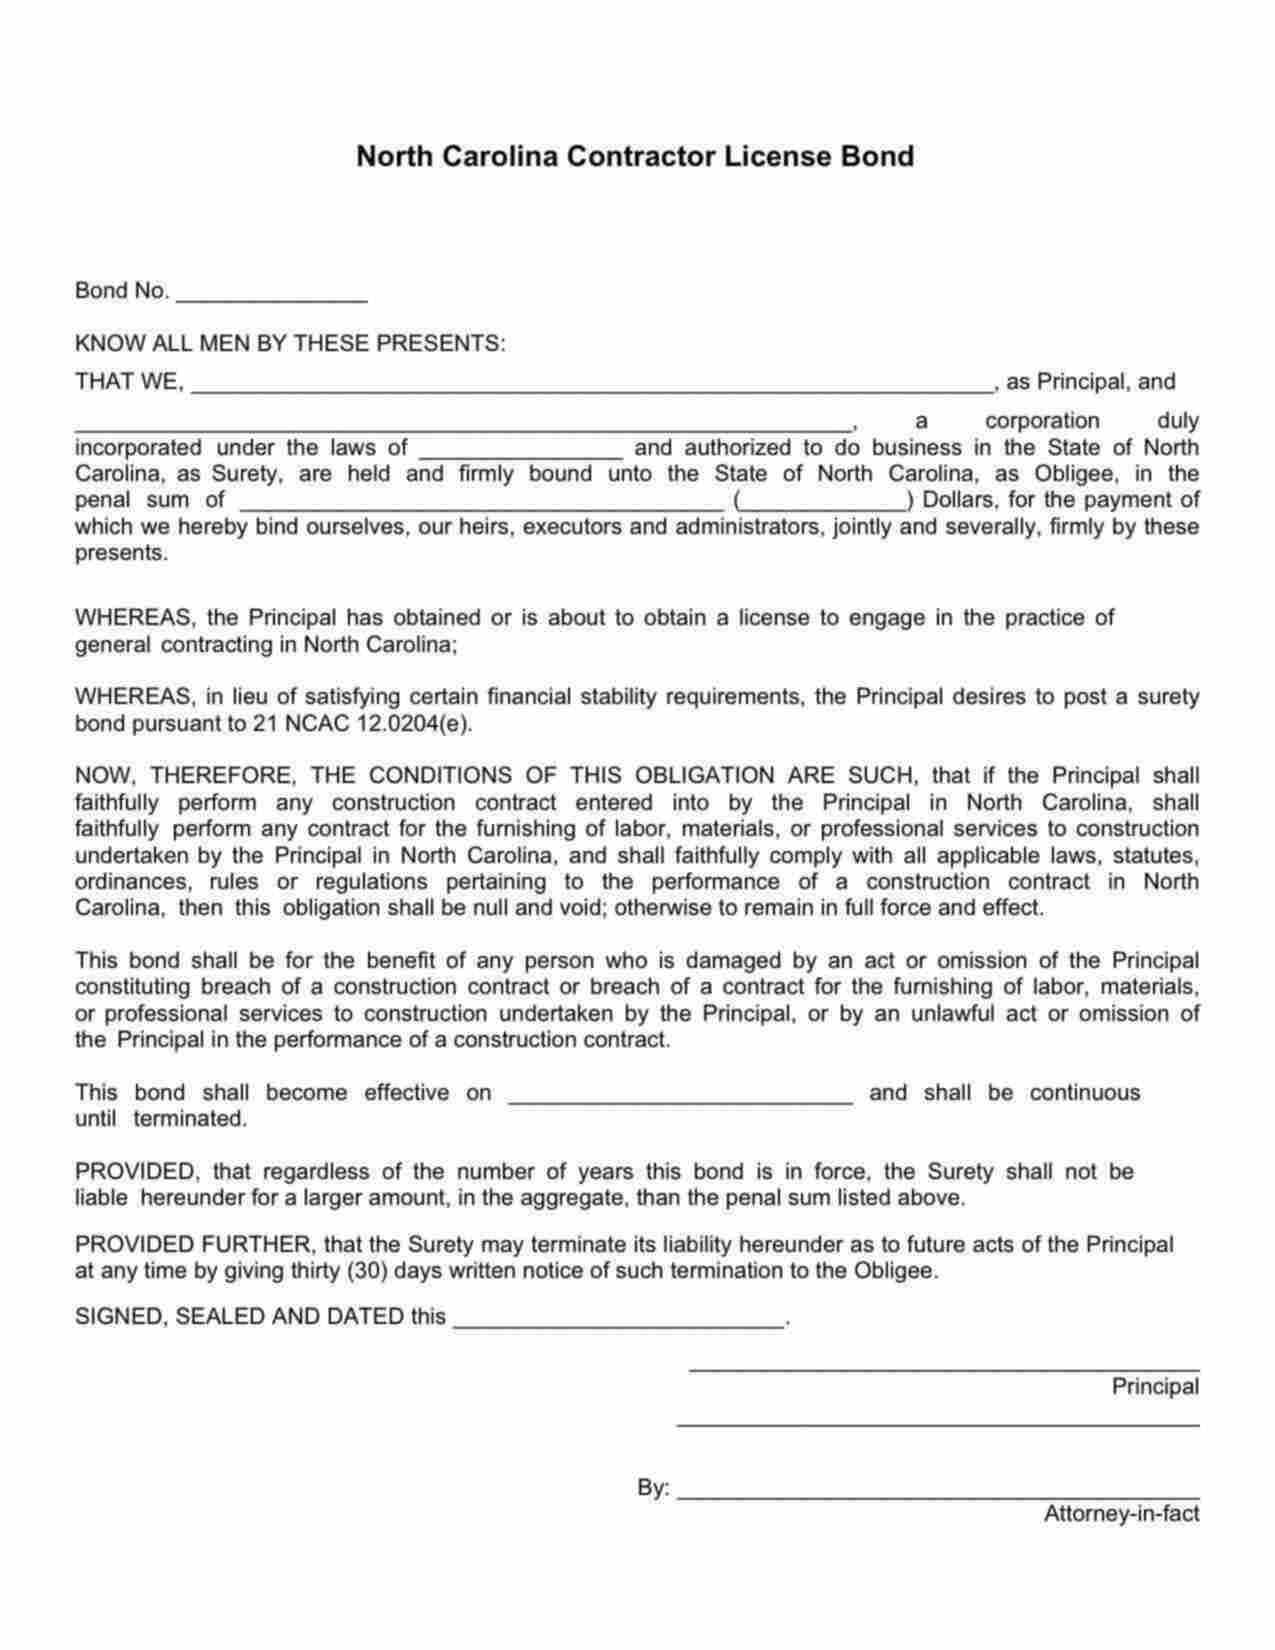 North Carolina Limited General Contractor License Bond Form